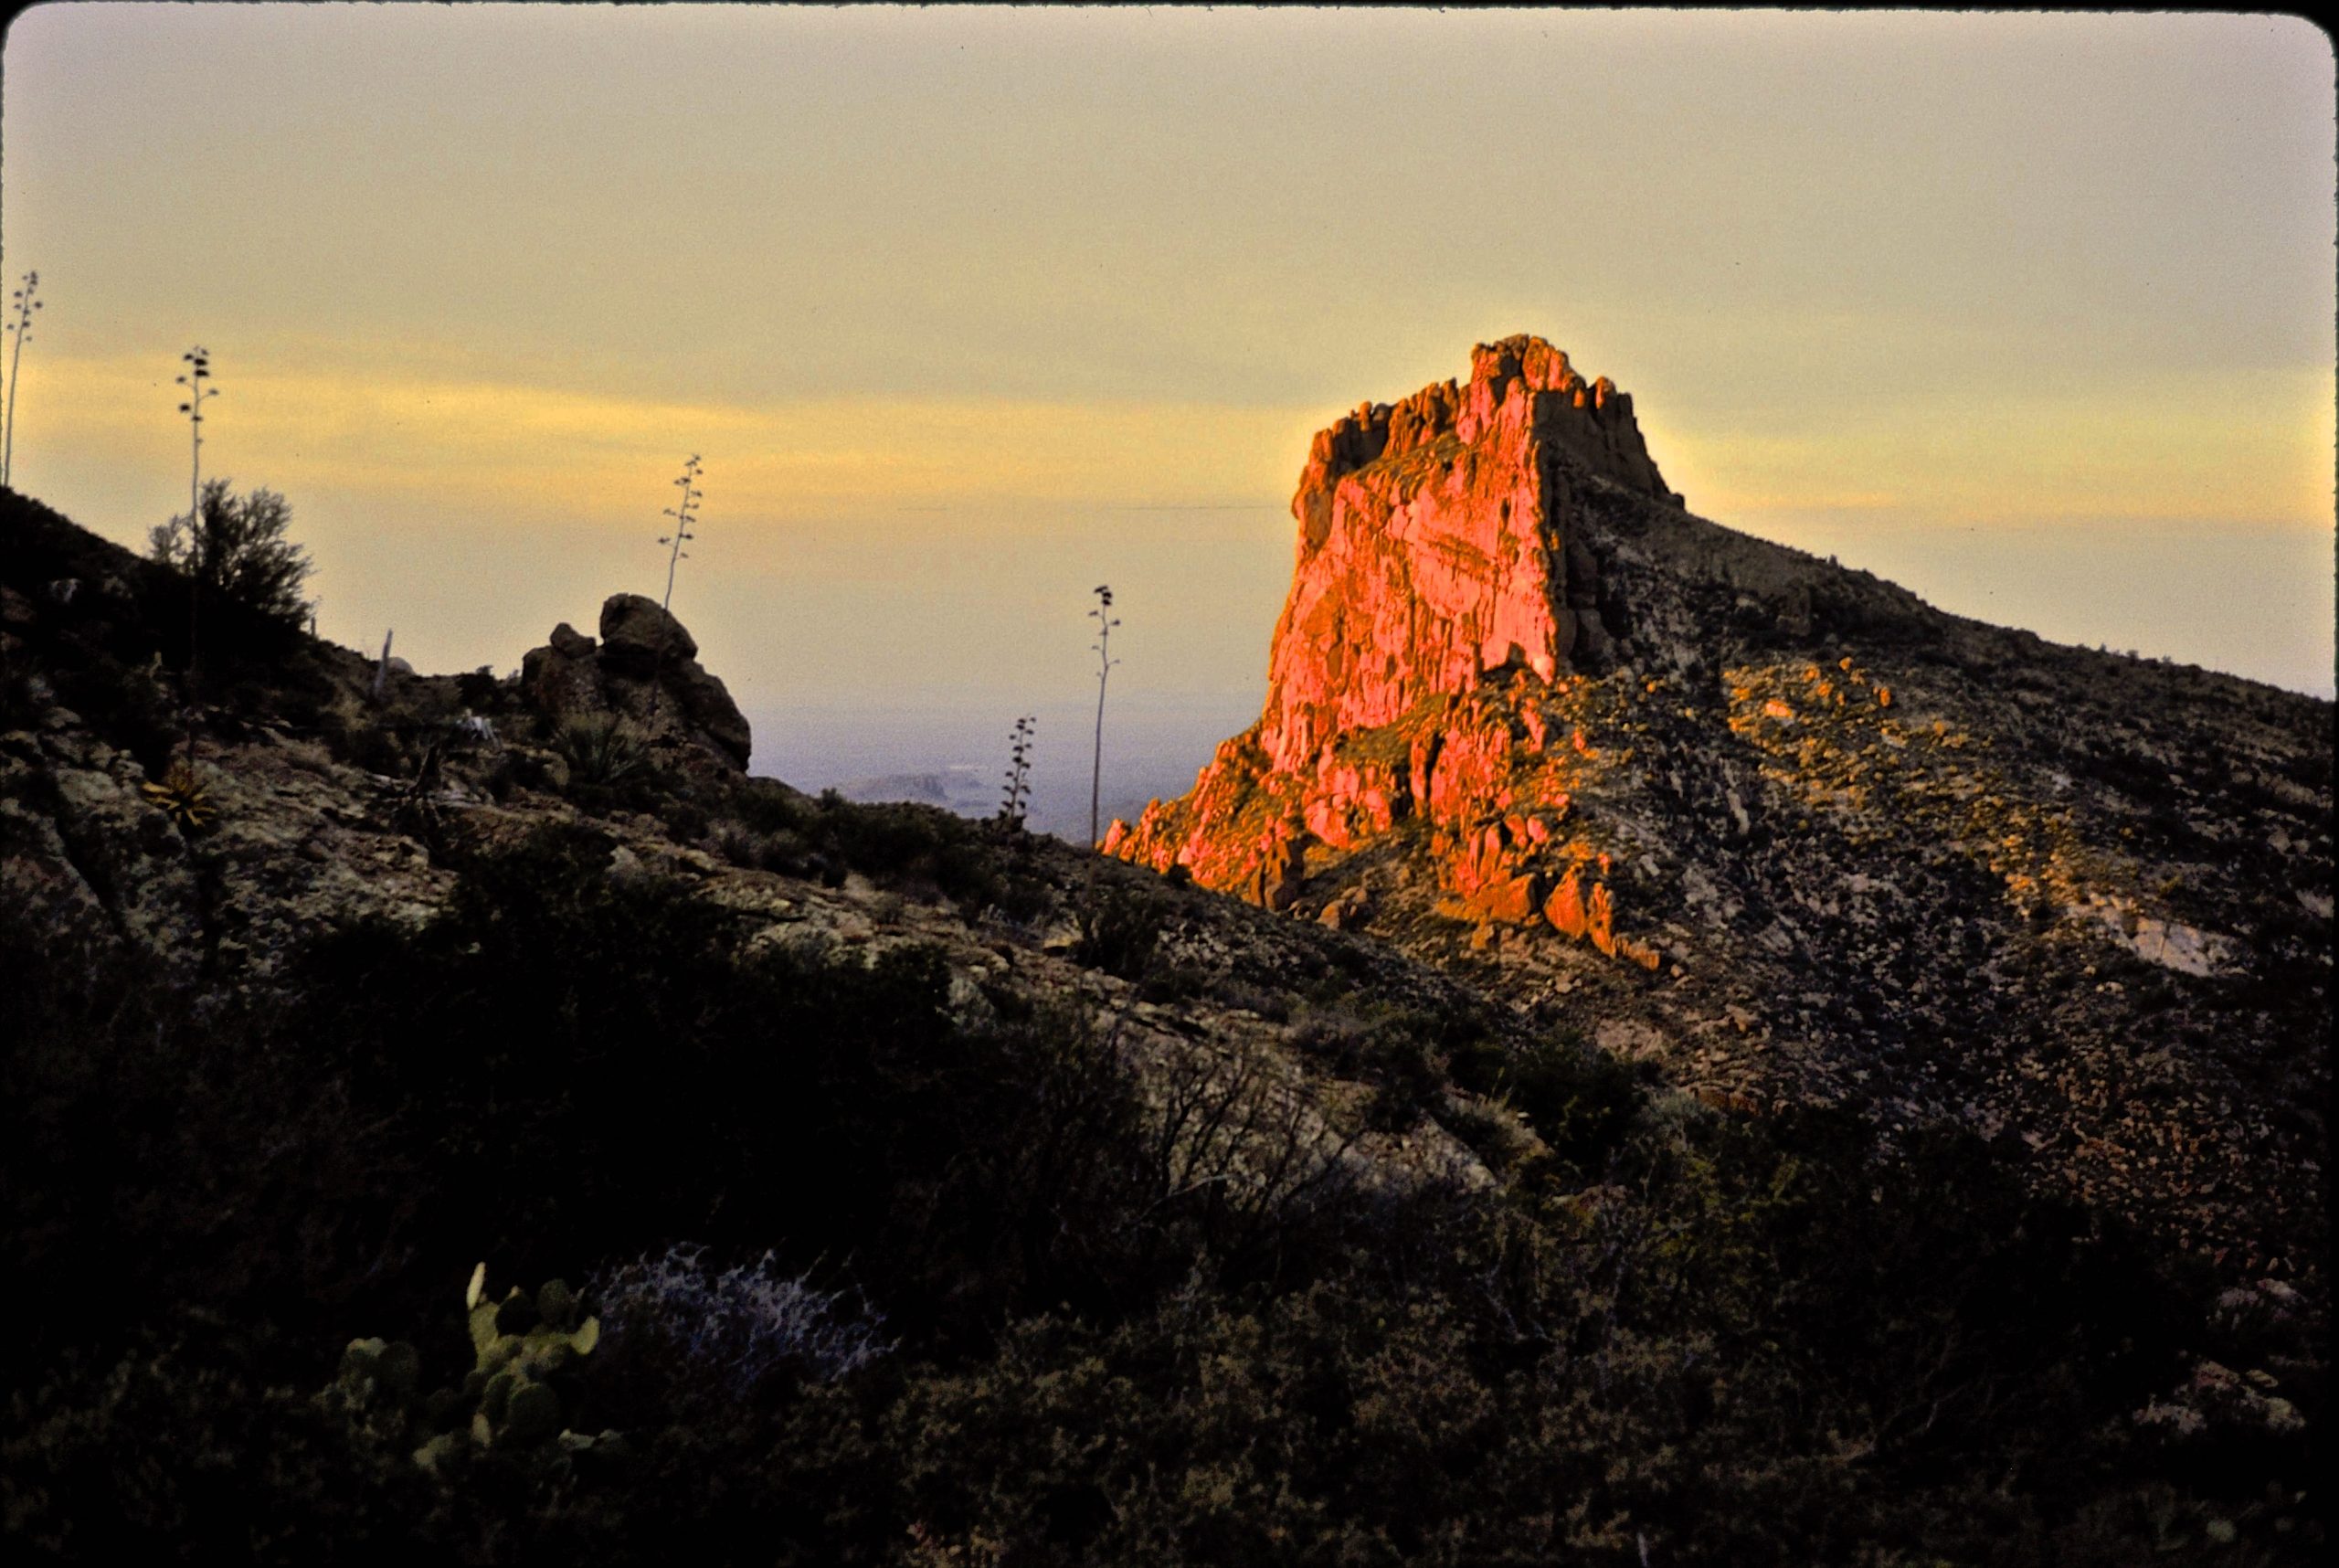 Dawn light on Superstition Mountains Wilderness Area, AZ (c) Dave Foreman